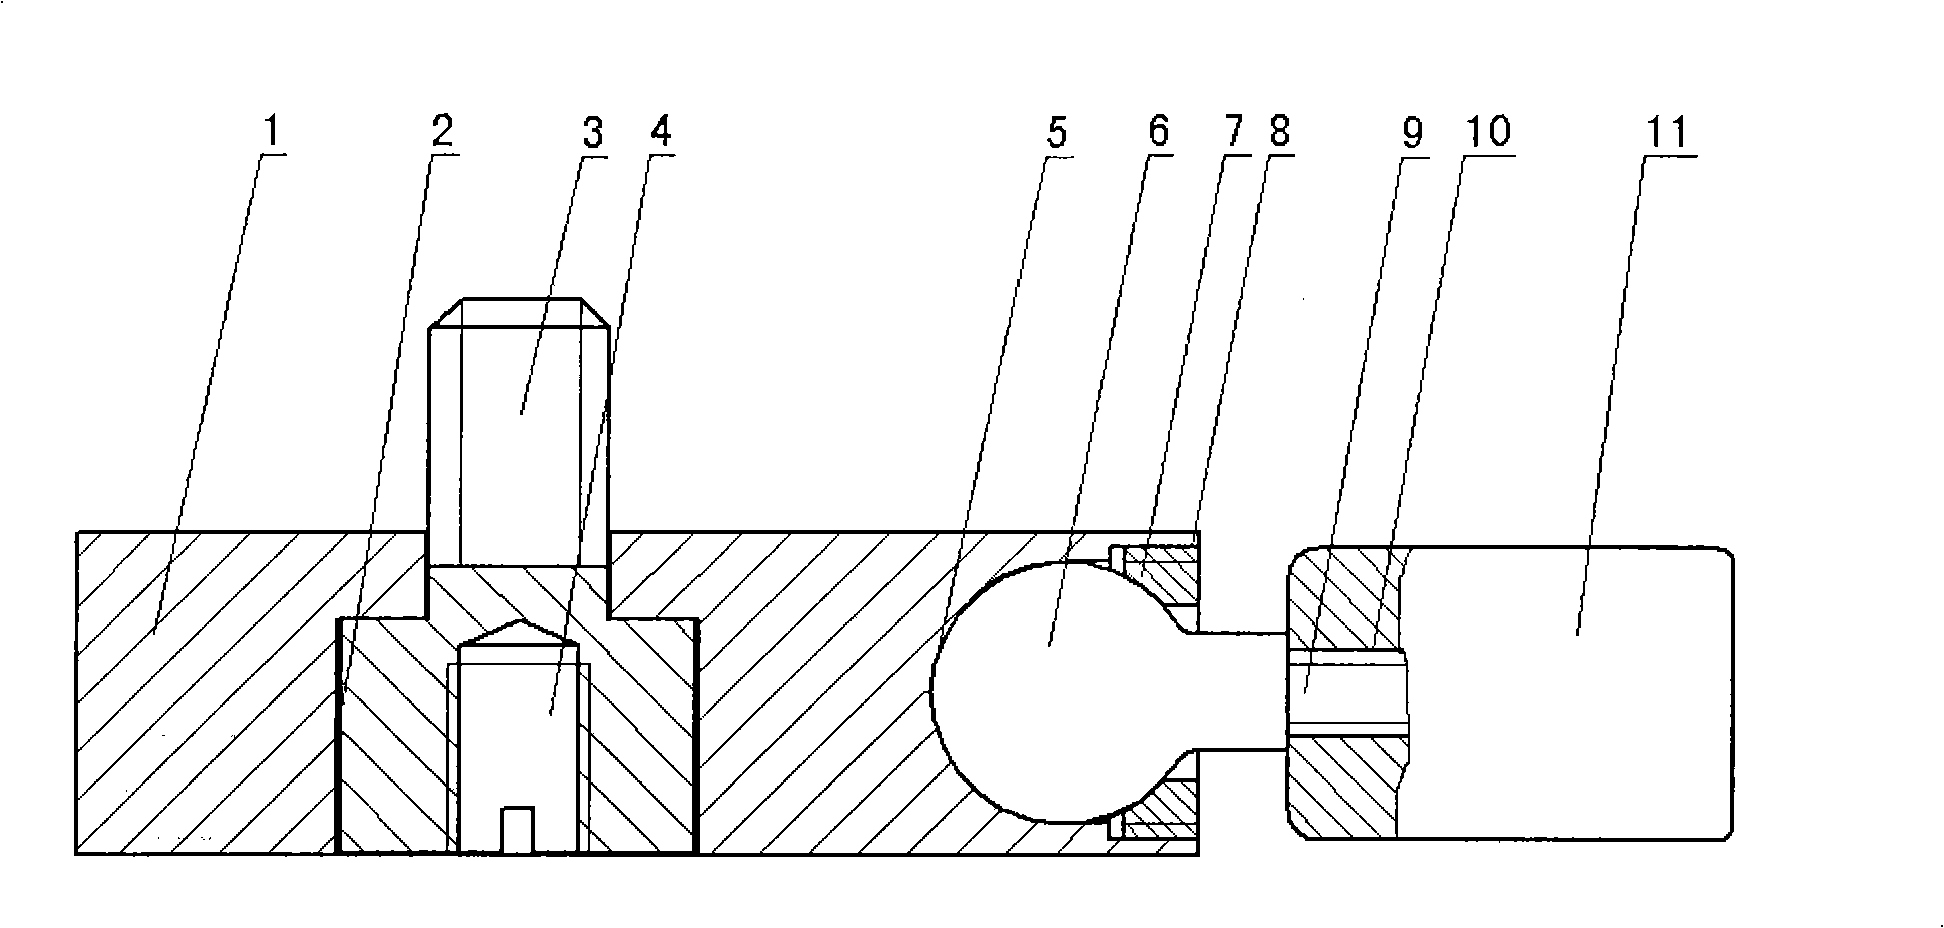 Manual laser cursor image positioning apparatus for camera